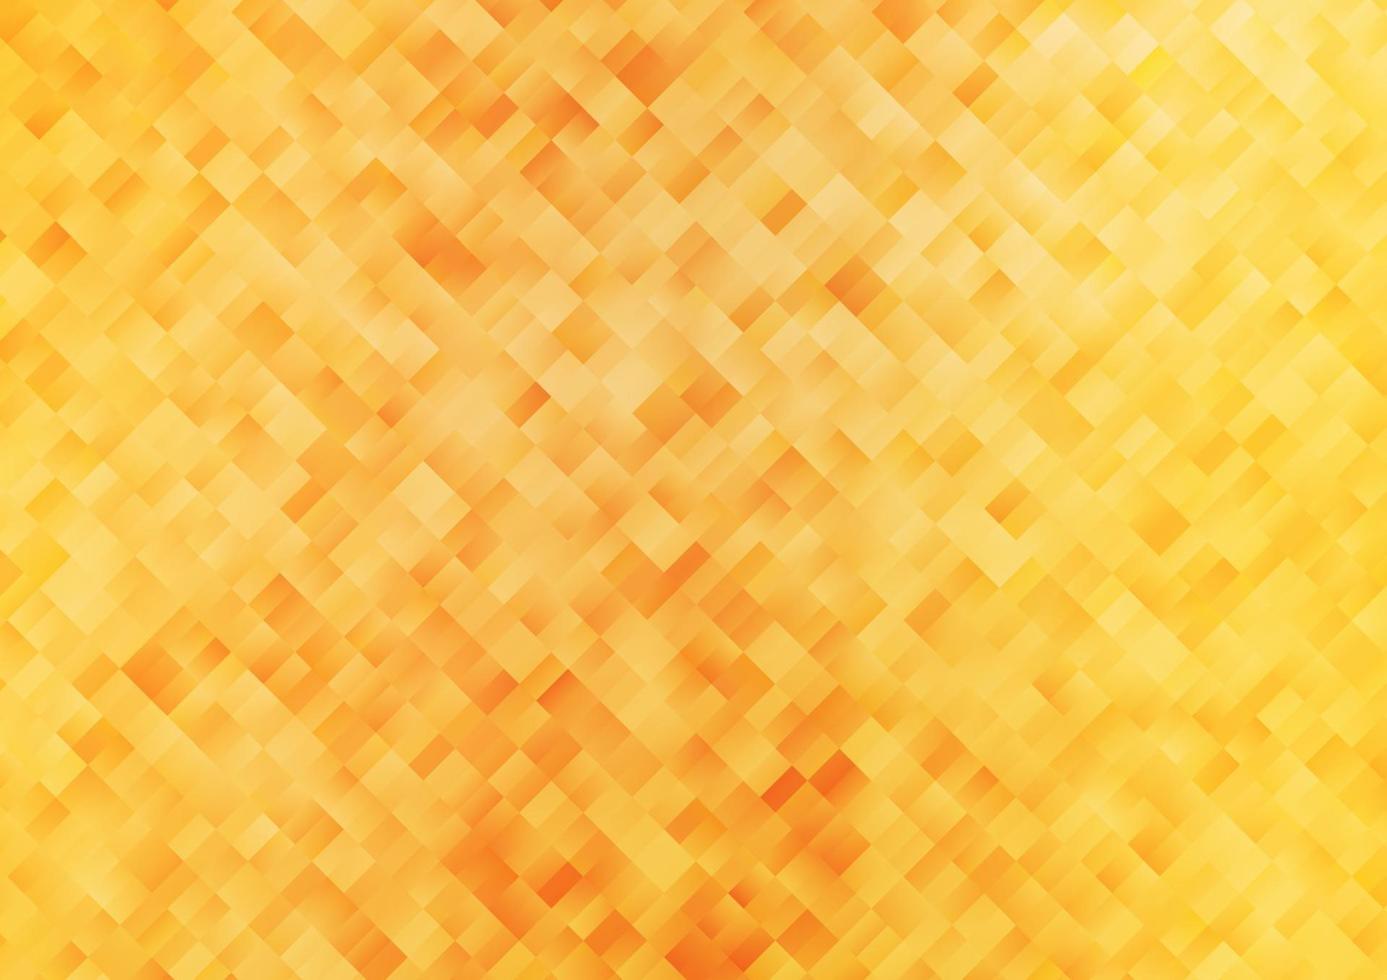 Light Orange vector cover in polygonal style.